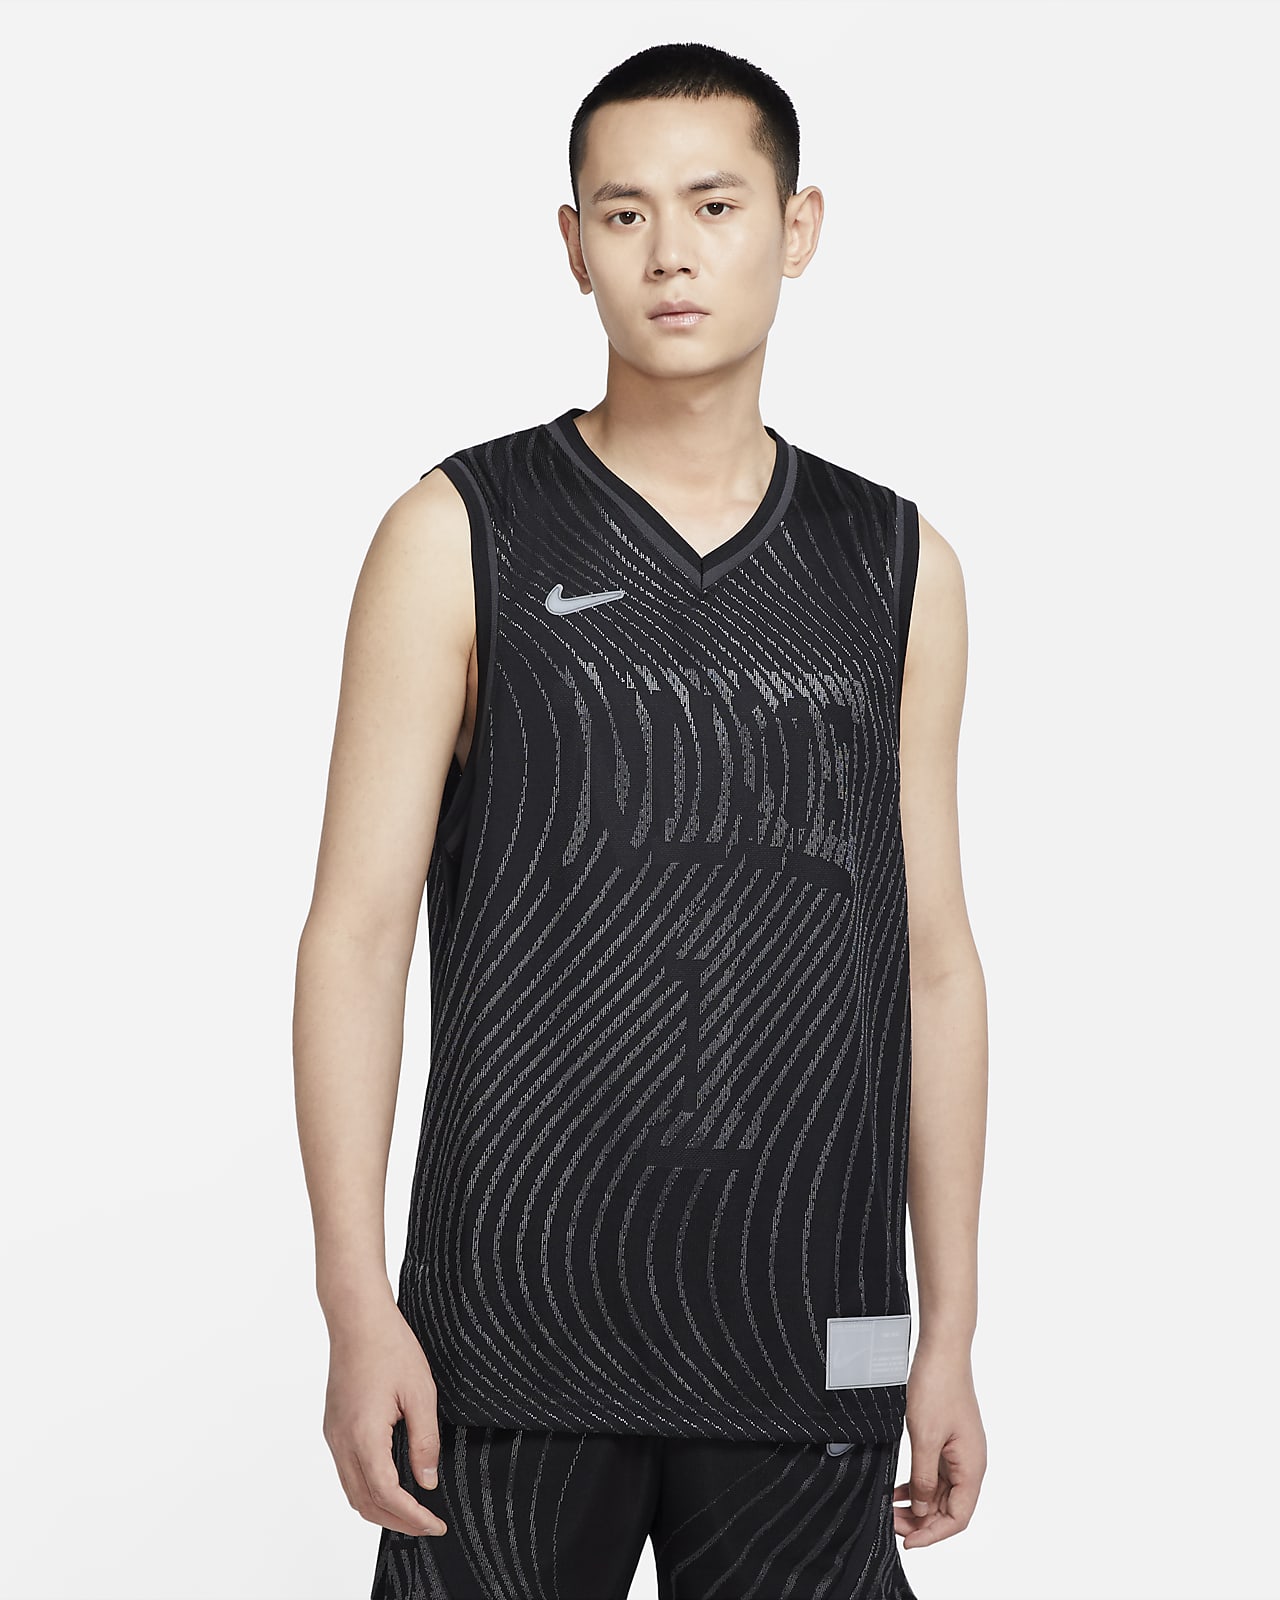 Nike Dri-FIT ADV Innovation 男子速干篮球球衣